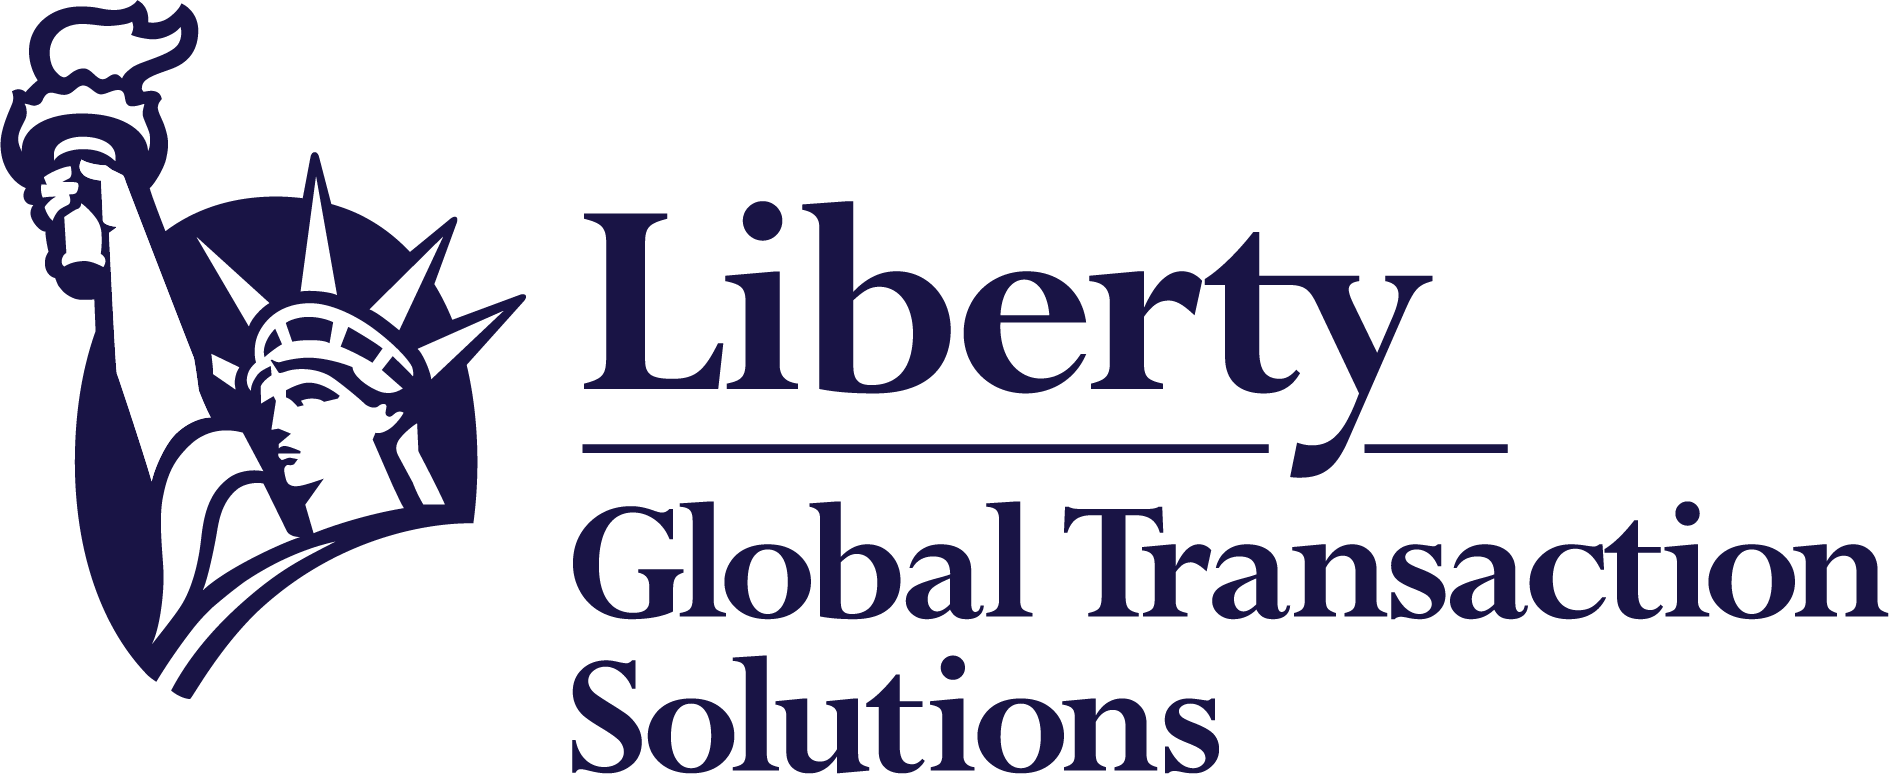 Liberty Global Transaction Solutions Logo